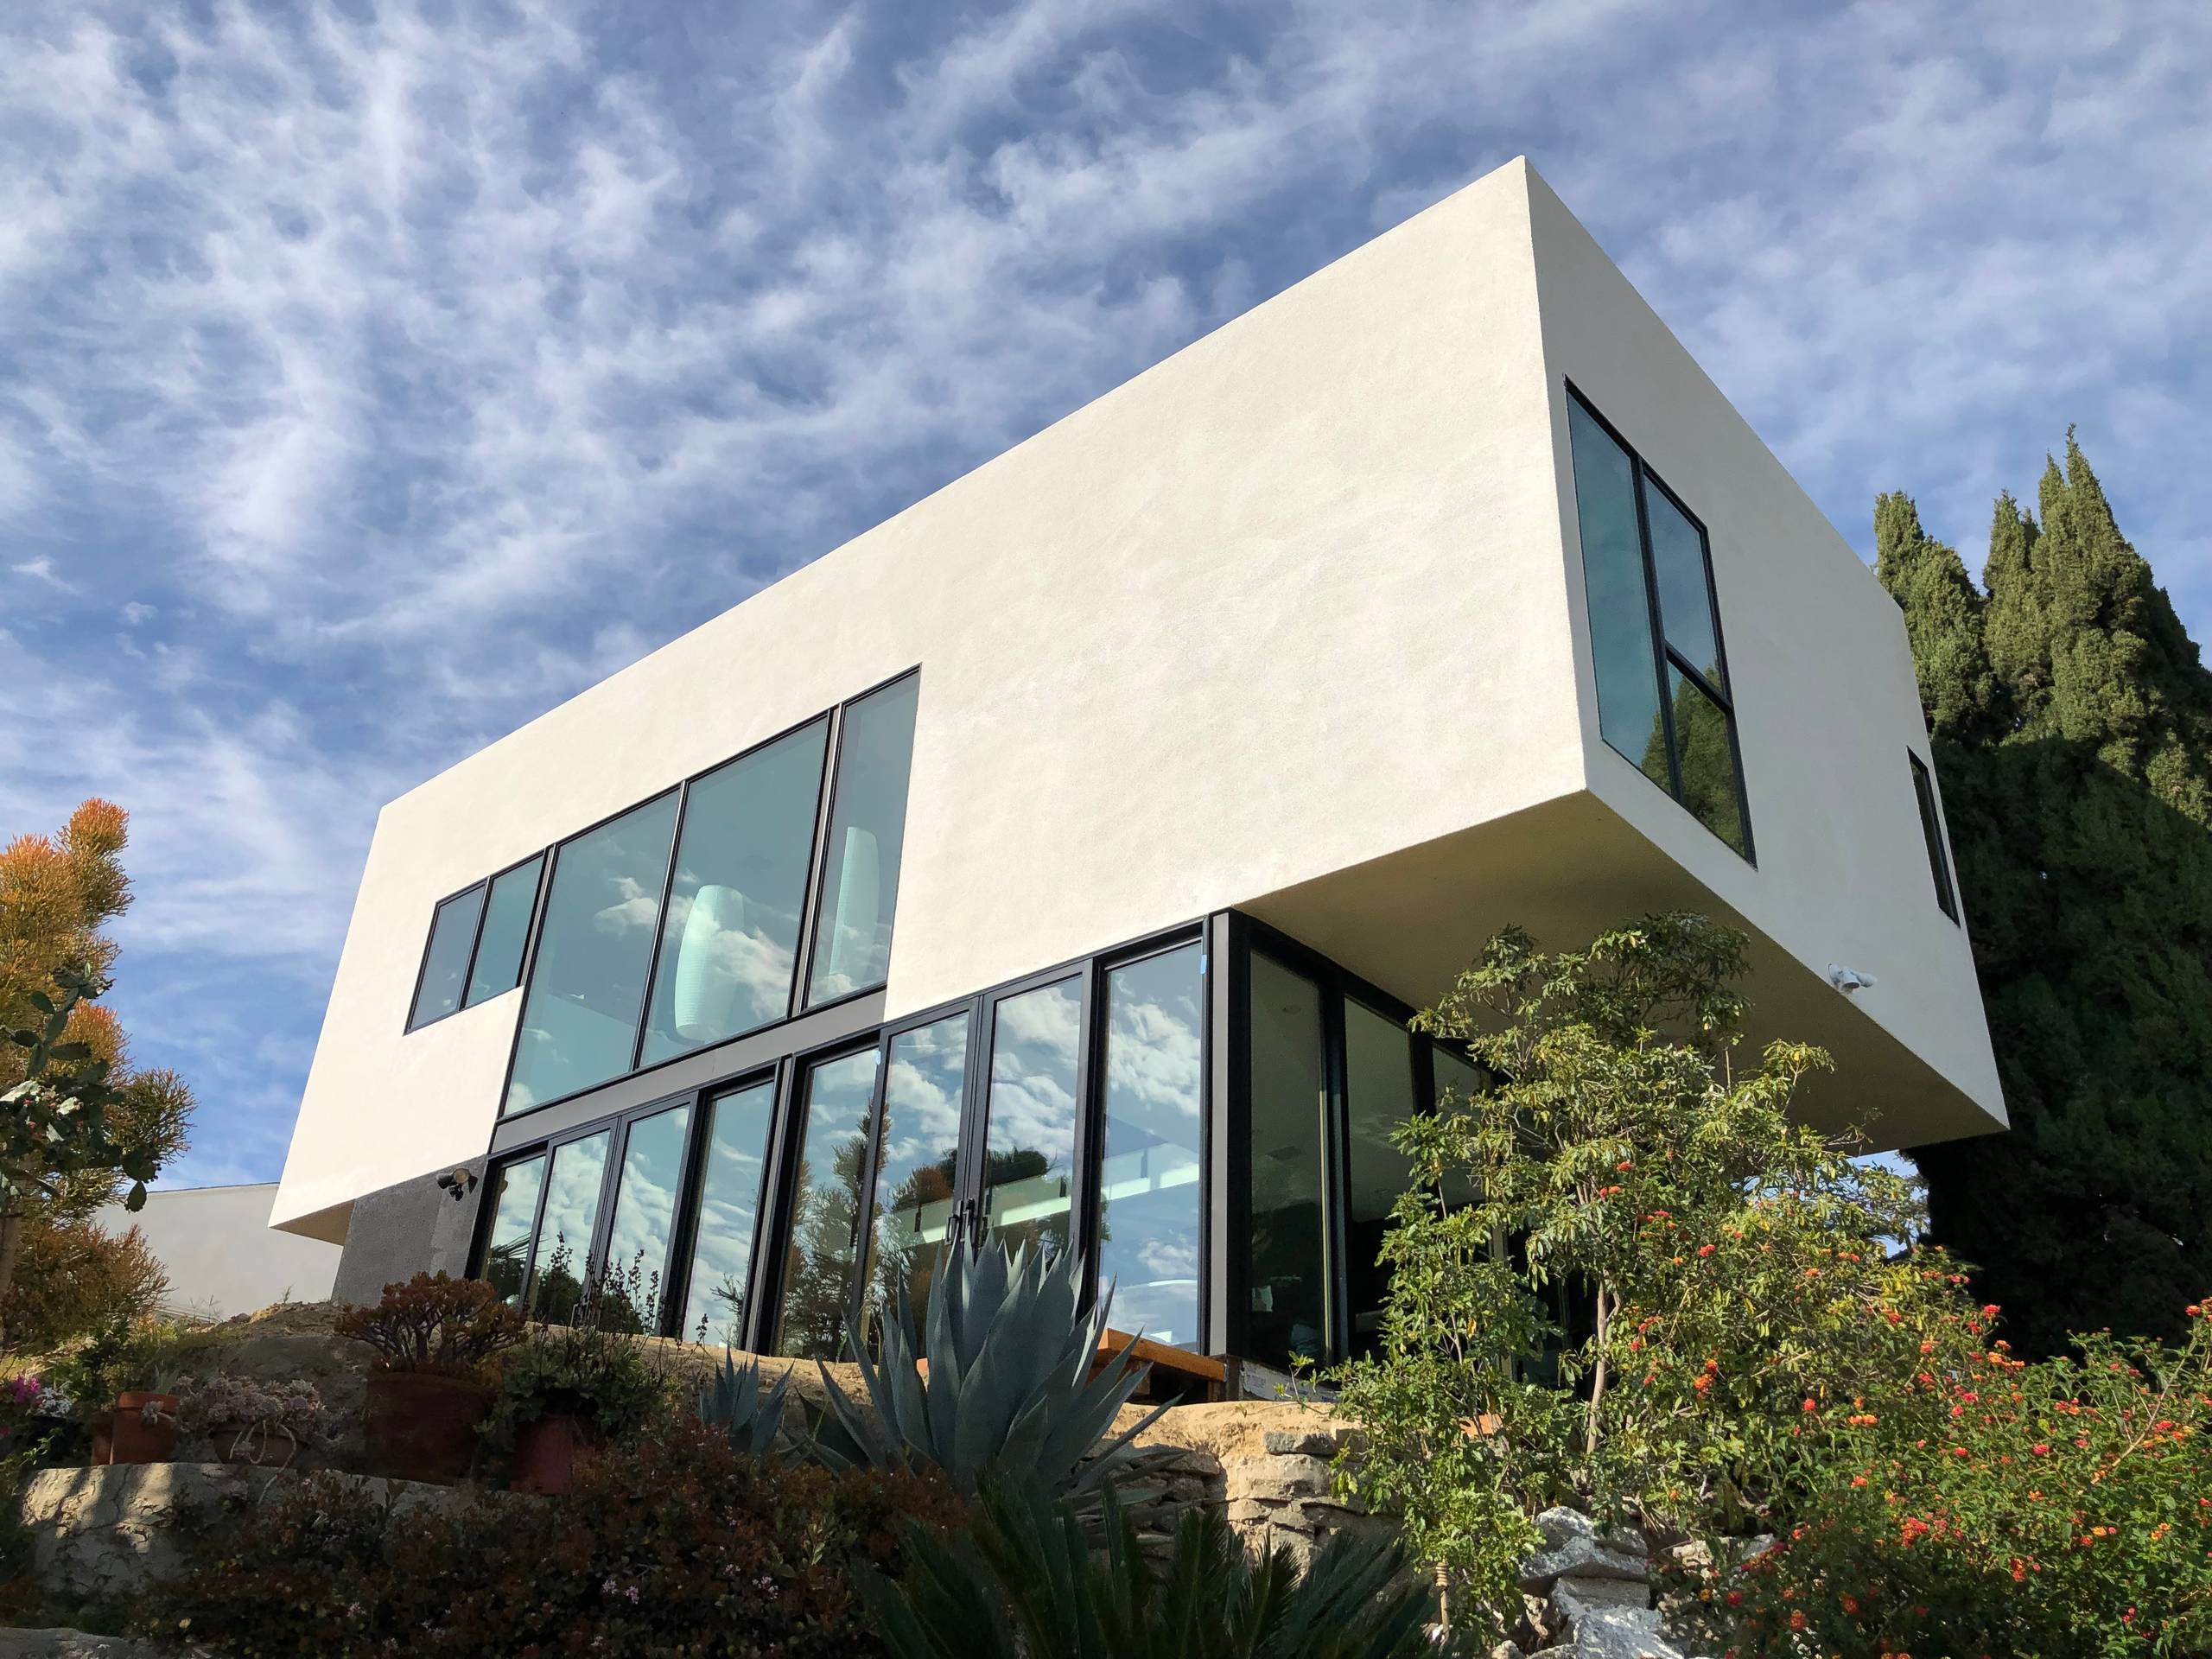 Echo Park, Los Angeles Complete Additional Dwelling Unit